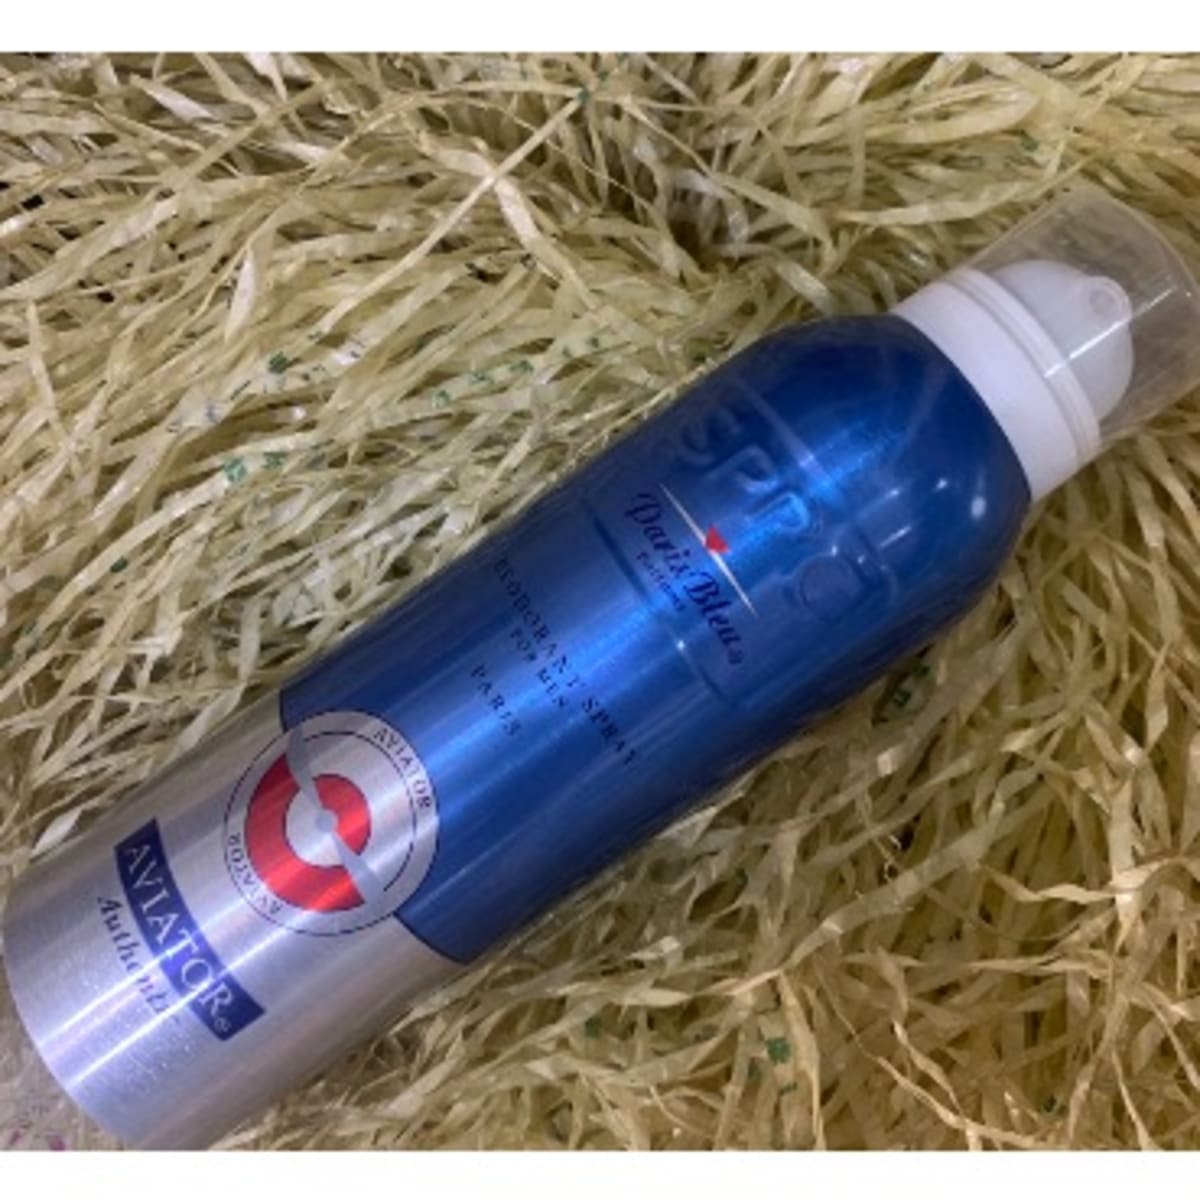 IVANHOE Deodorant for Men - Spray bottle of 200ml